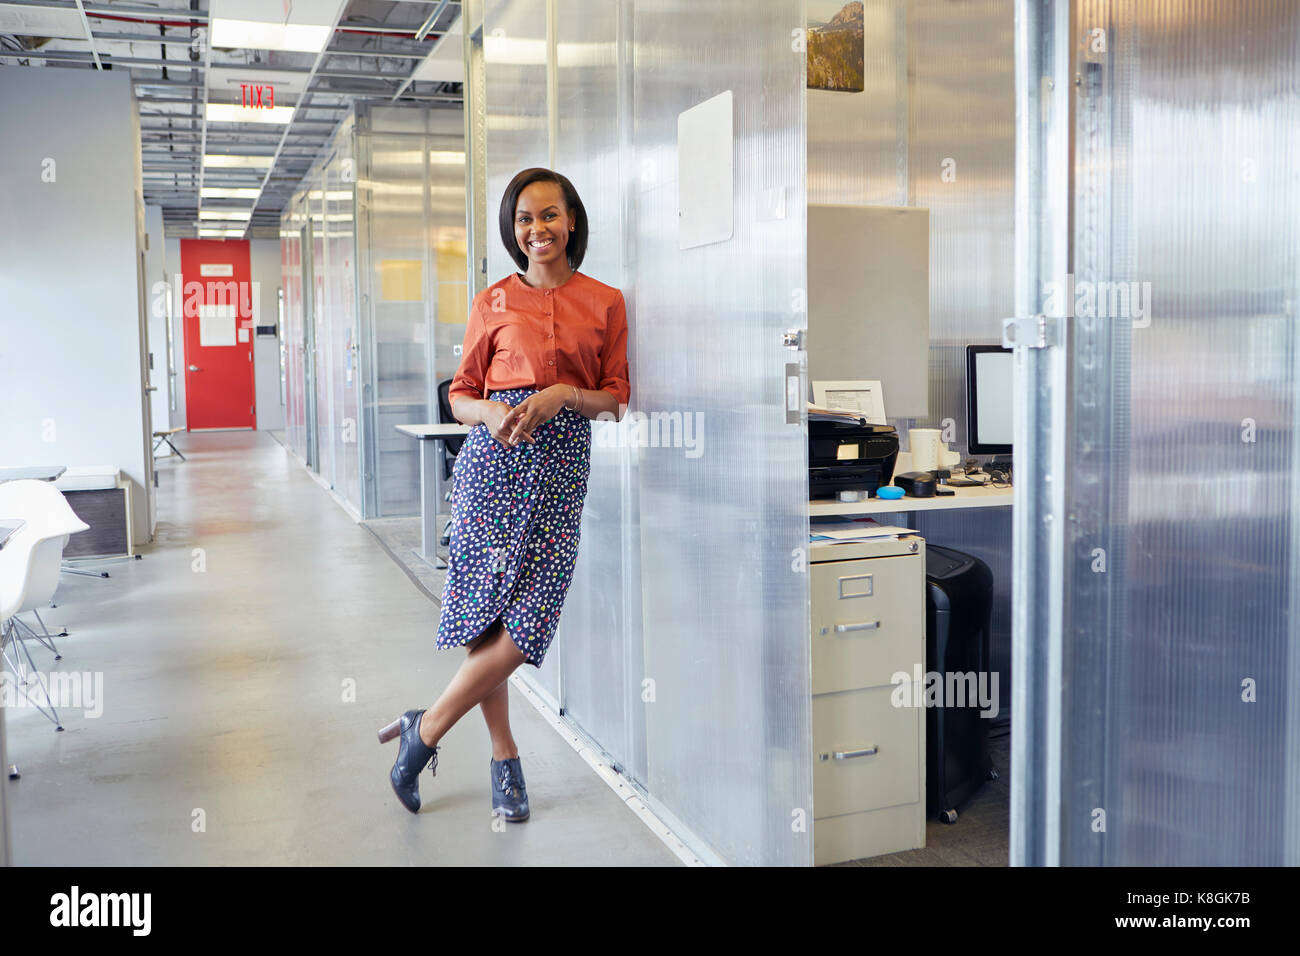 Portrait of businesswoman standing in office corridor, appuyé contre office surround, smiling Banque D'Images